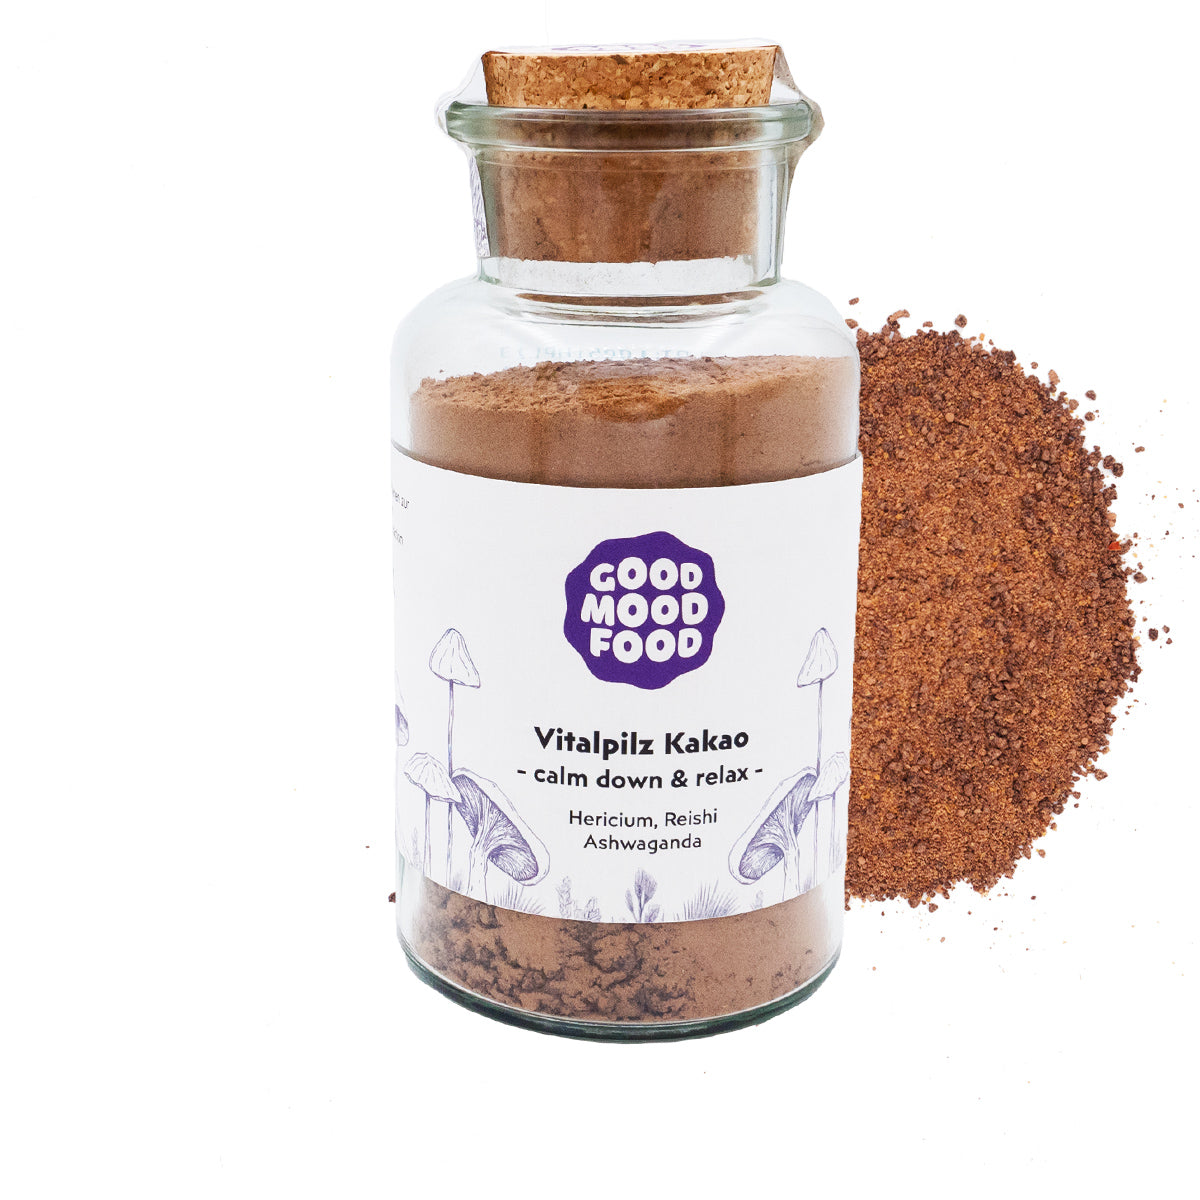 Vitalpilz Kakao im Glas, 100%Rohkakao kombiniert mit Vitalpilzen ,Vitalpilze (Hericium ; Reishi) treffen sich mit 100% peruanischem Rohkakao; Ashwagandha